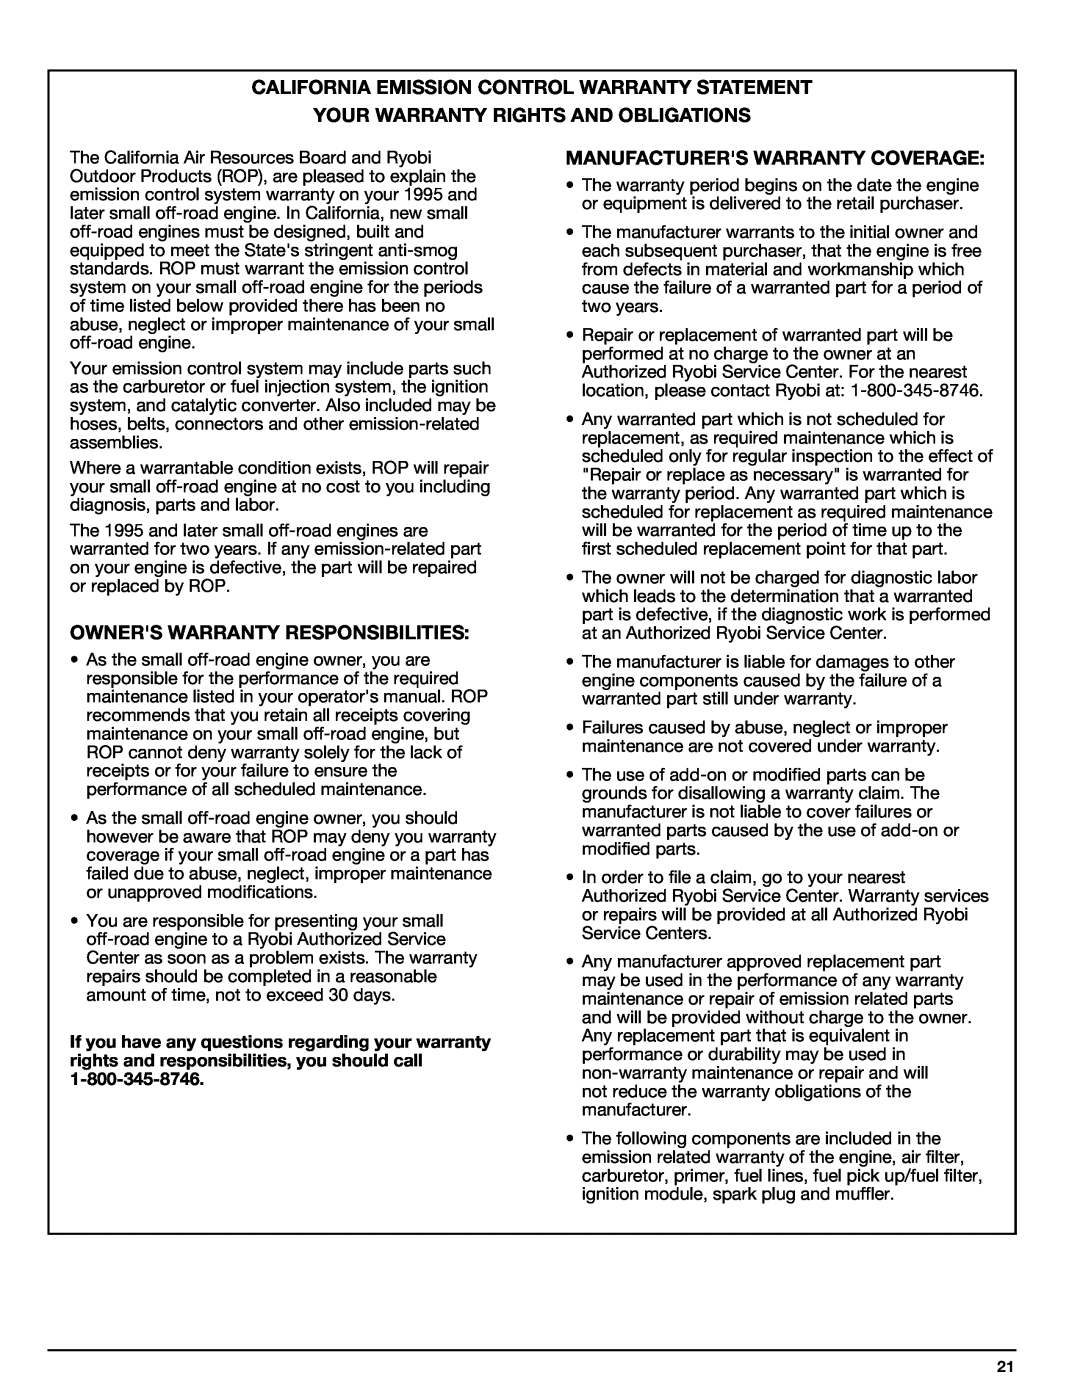 Ryobi 767rj manual California Emission Control Warranty Statement, Your Warranty Rights And Obligations 